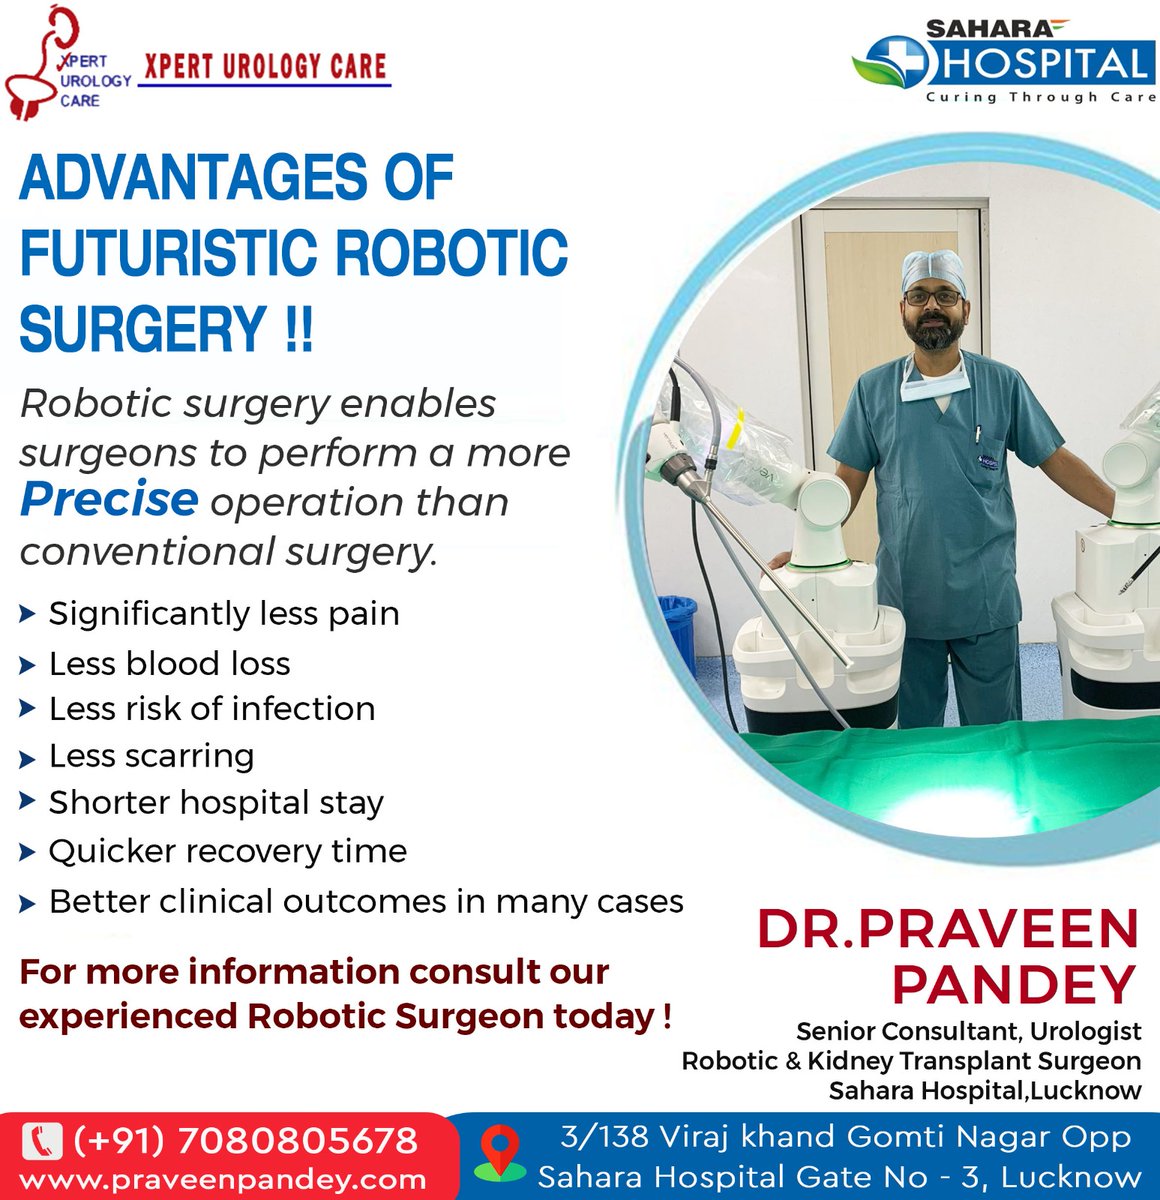 #roboticsurgery #roboticsurgeon #surgery #kidneystones #KidneyStoneTreatment #kidneytransplantsurgeon #endoscopy #urinarybllader Dr. Praveen Pandey Senior Consultant, Urologist (Robotic & Kidney Transplant Surgeon) Xpert Urology Care, Opp SAHARA HOSPITAL, Gate No. 3